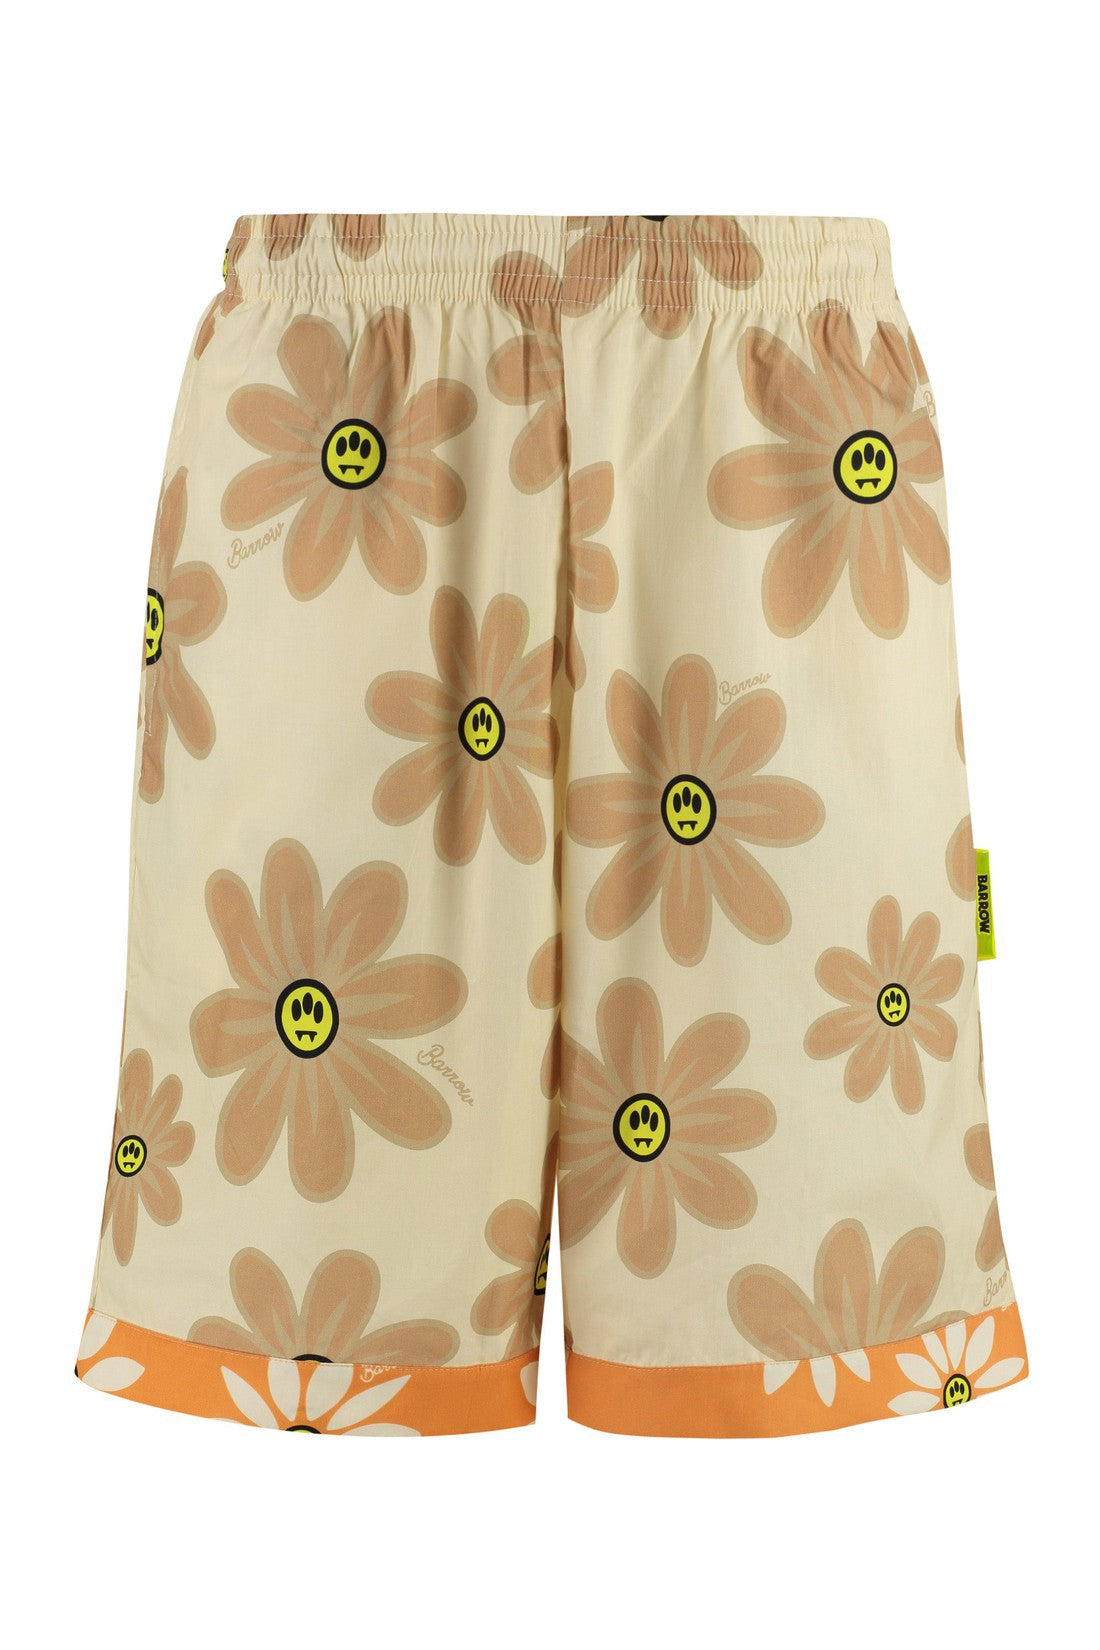 Barrow-OUTLET-SALE-Printed cotton bermuda shorts-ARCHIVIST